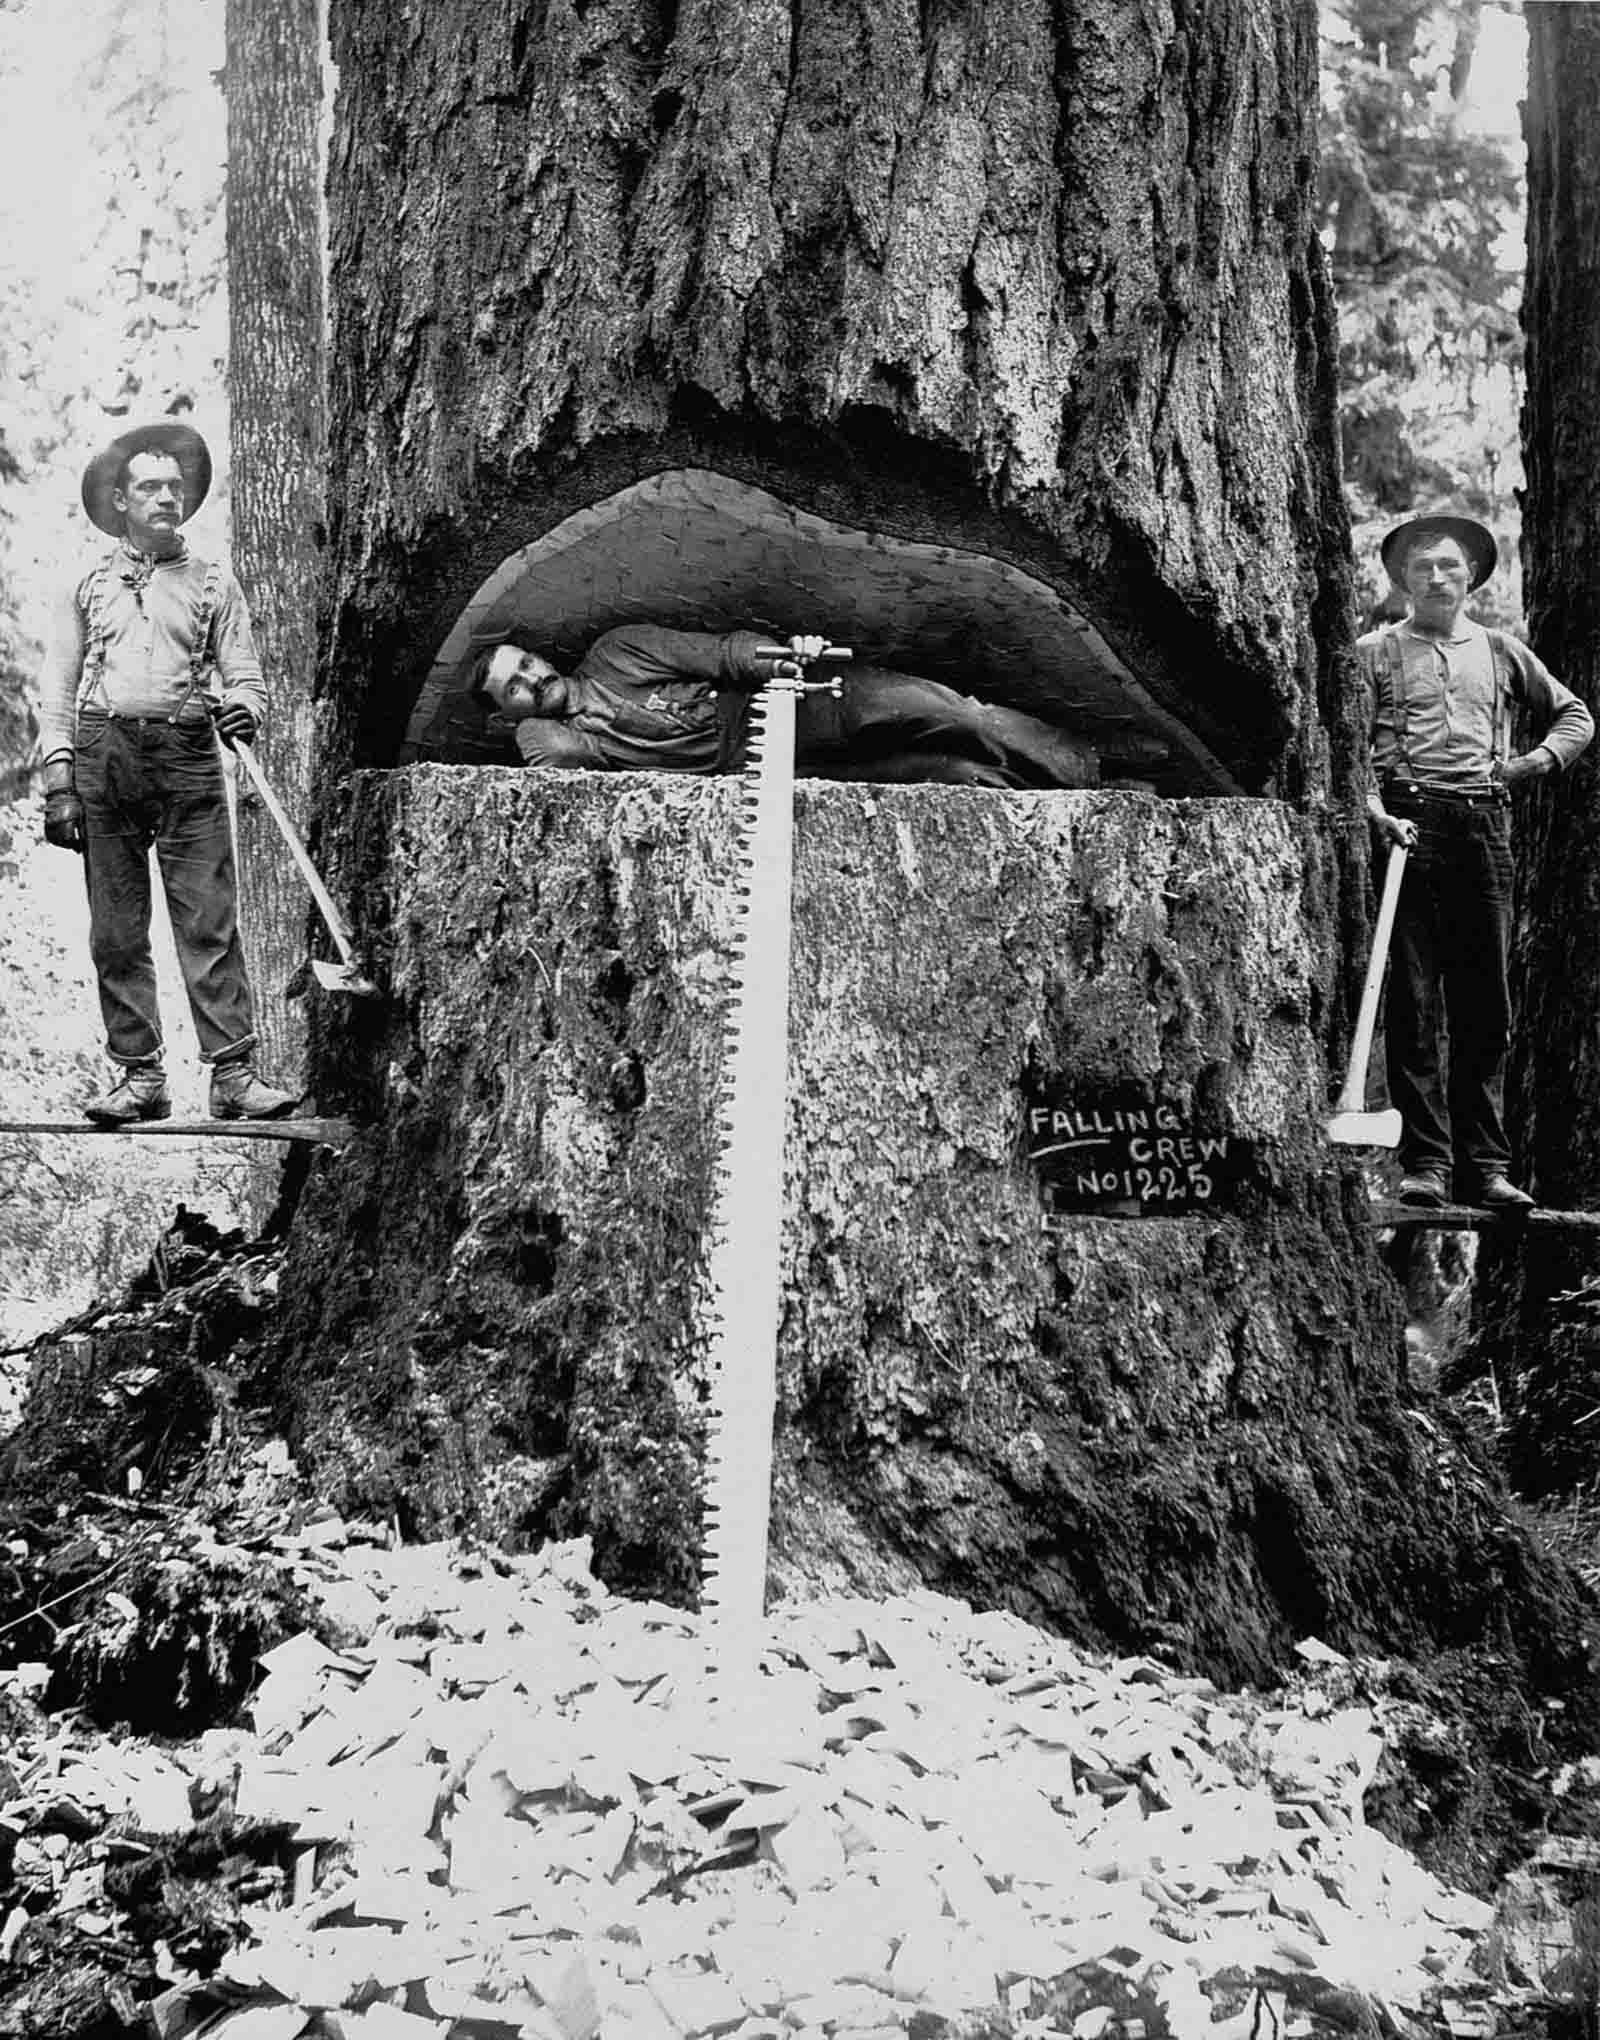 Lumberjacks pose with a Douglas fir tree in Washington, 1899.